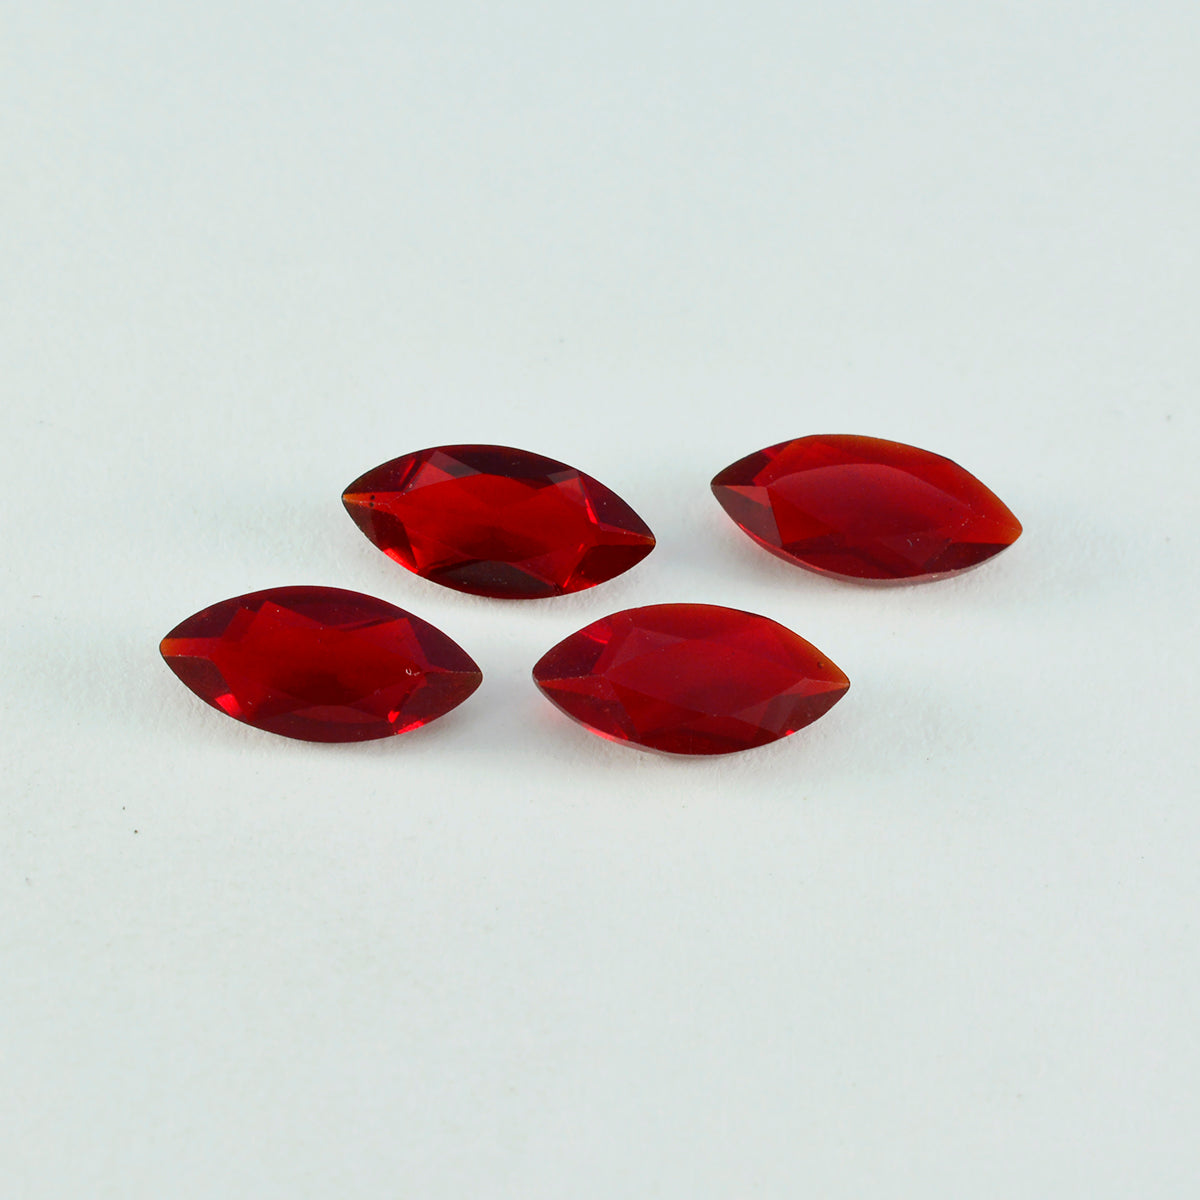 Riyogems 1PC Red Ruby CZ Faceted 8x16 mm Marquise Shape pretty Quality Gemstone